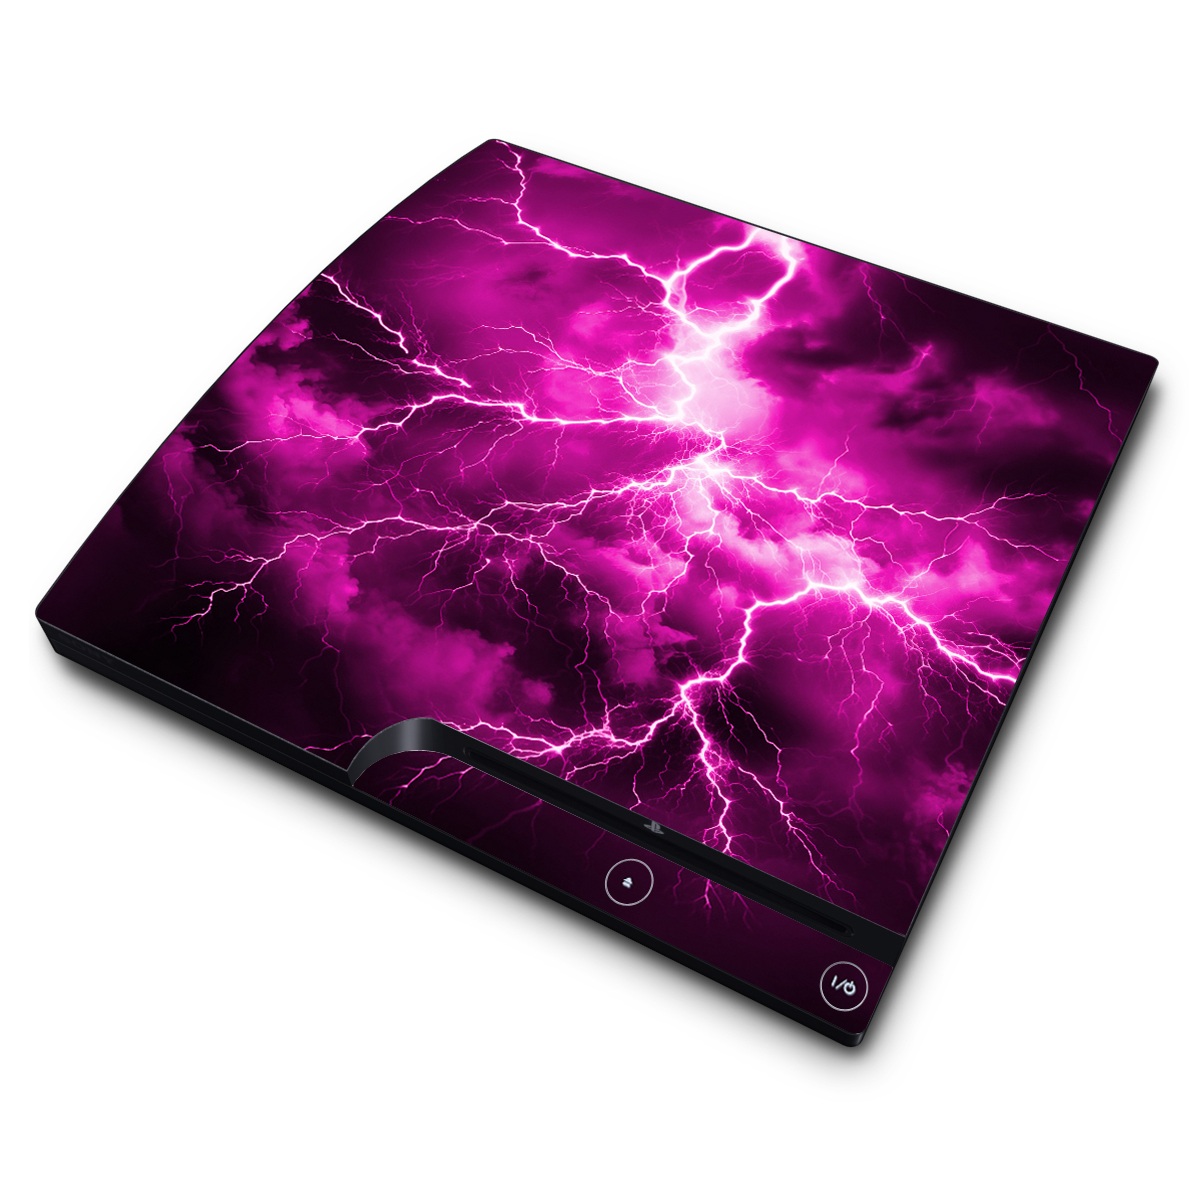 PlayStation 3 Slim Skin design of Sky, Thunder, Lightning, Thunderstorm, Atmosphere, White, Purple, Light, Nature, Water, with black, pink colors